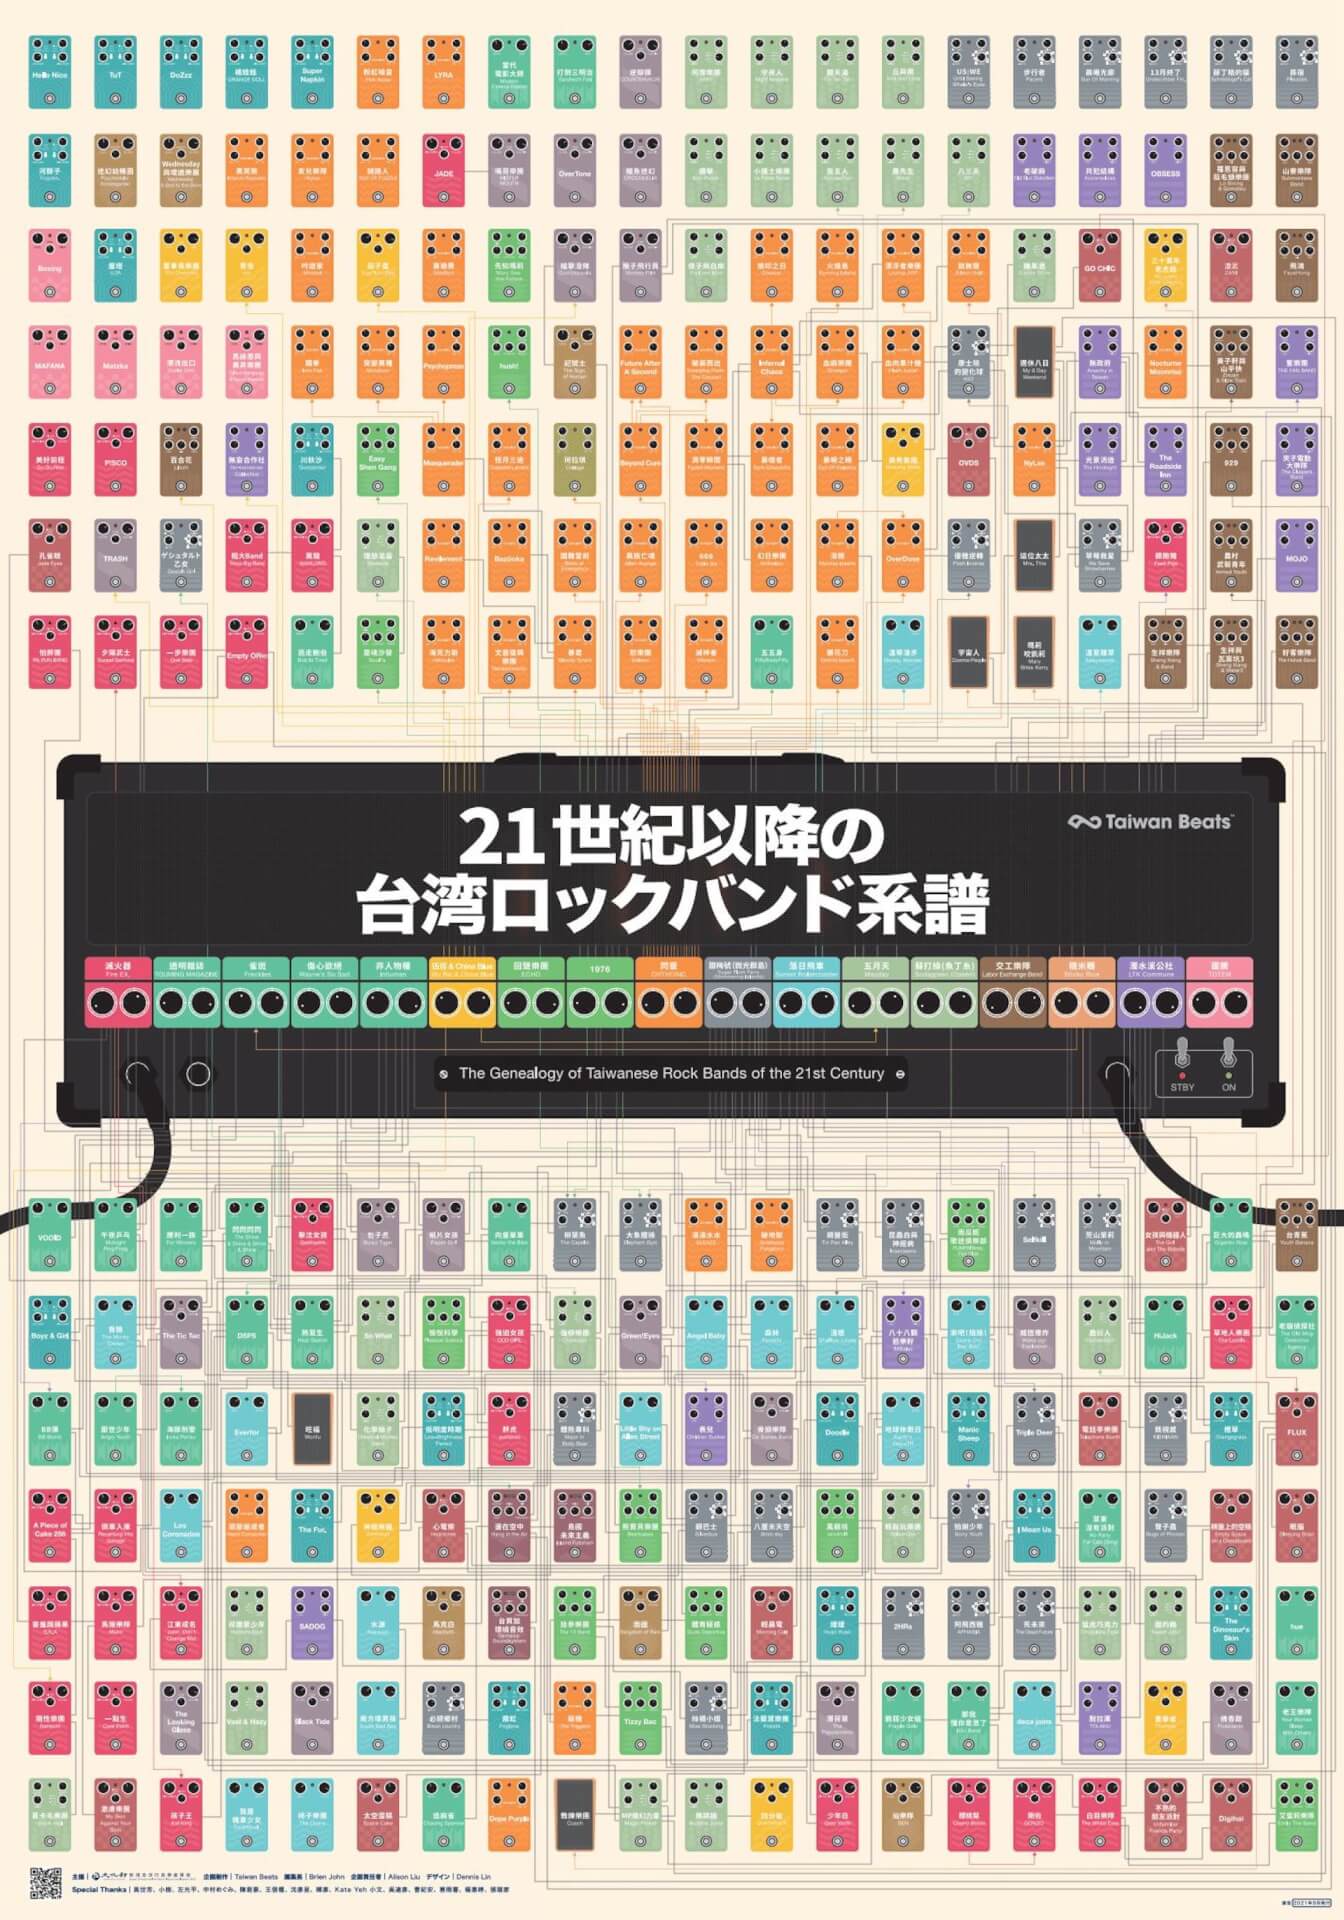 TAIWAN BEATSが台湾音楽の歴史とルーツを辿る3種類の「台湾ミュージックサマリーポスター」を全日本語で発行！ music211011_taiwanbeats_02